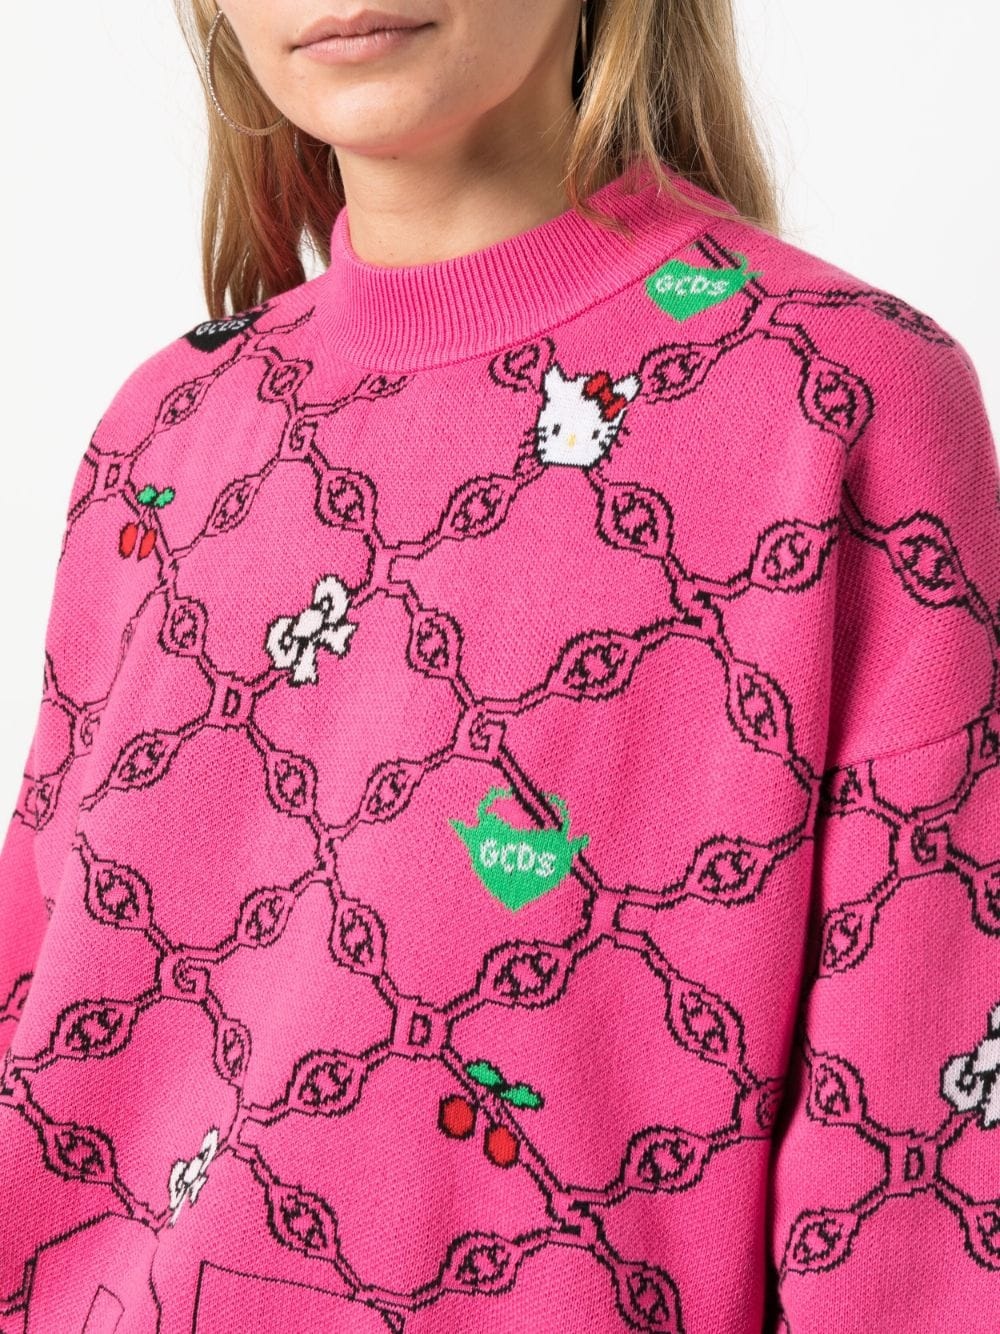 x Hello Kitty patterned-intarsia-knit sweatshirt - 5